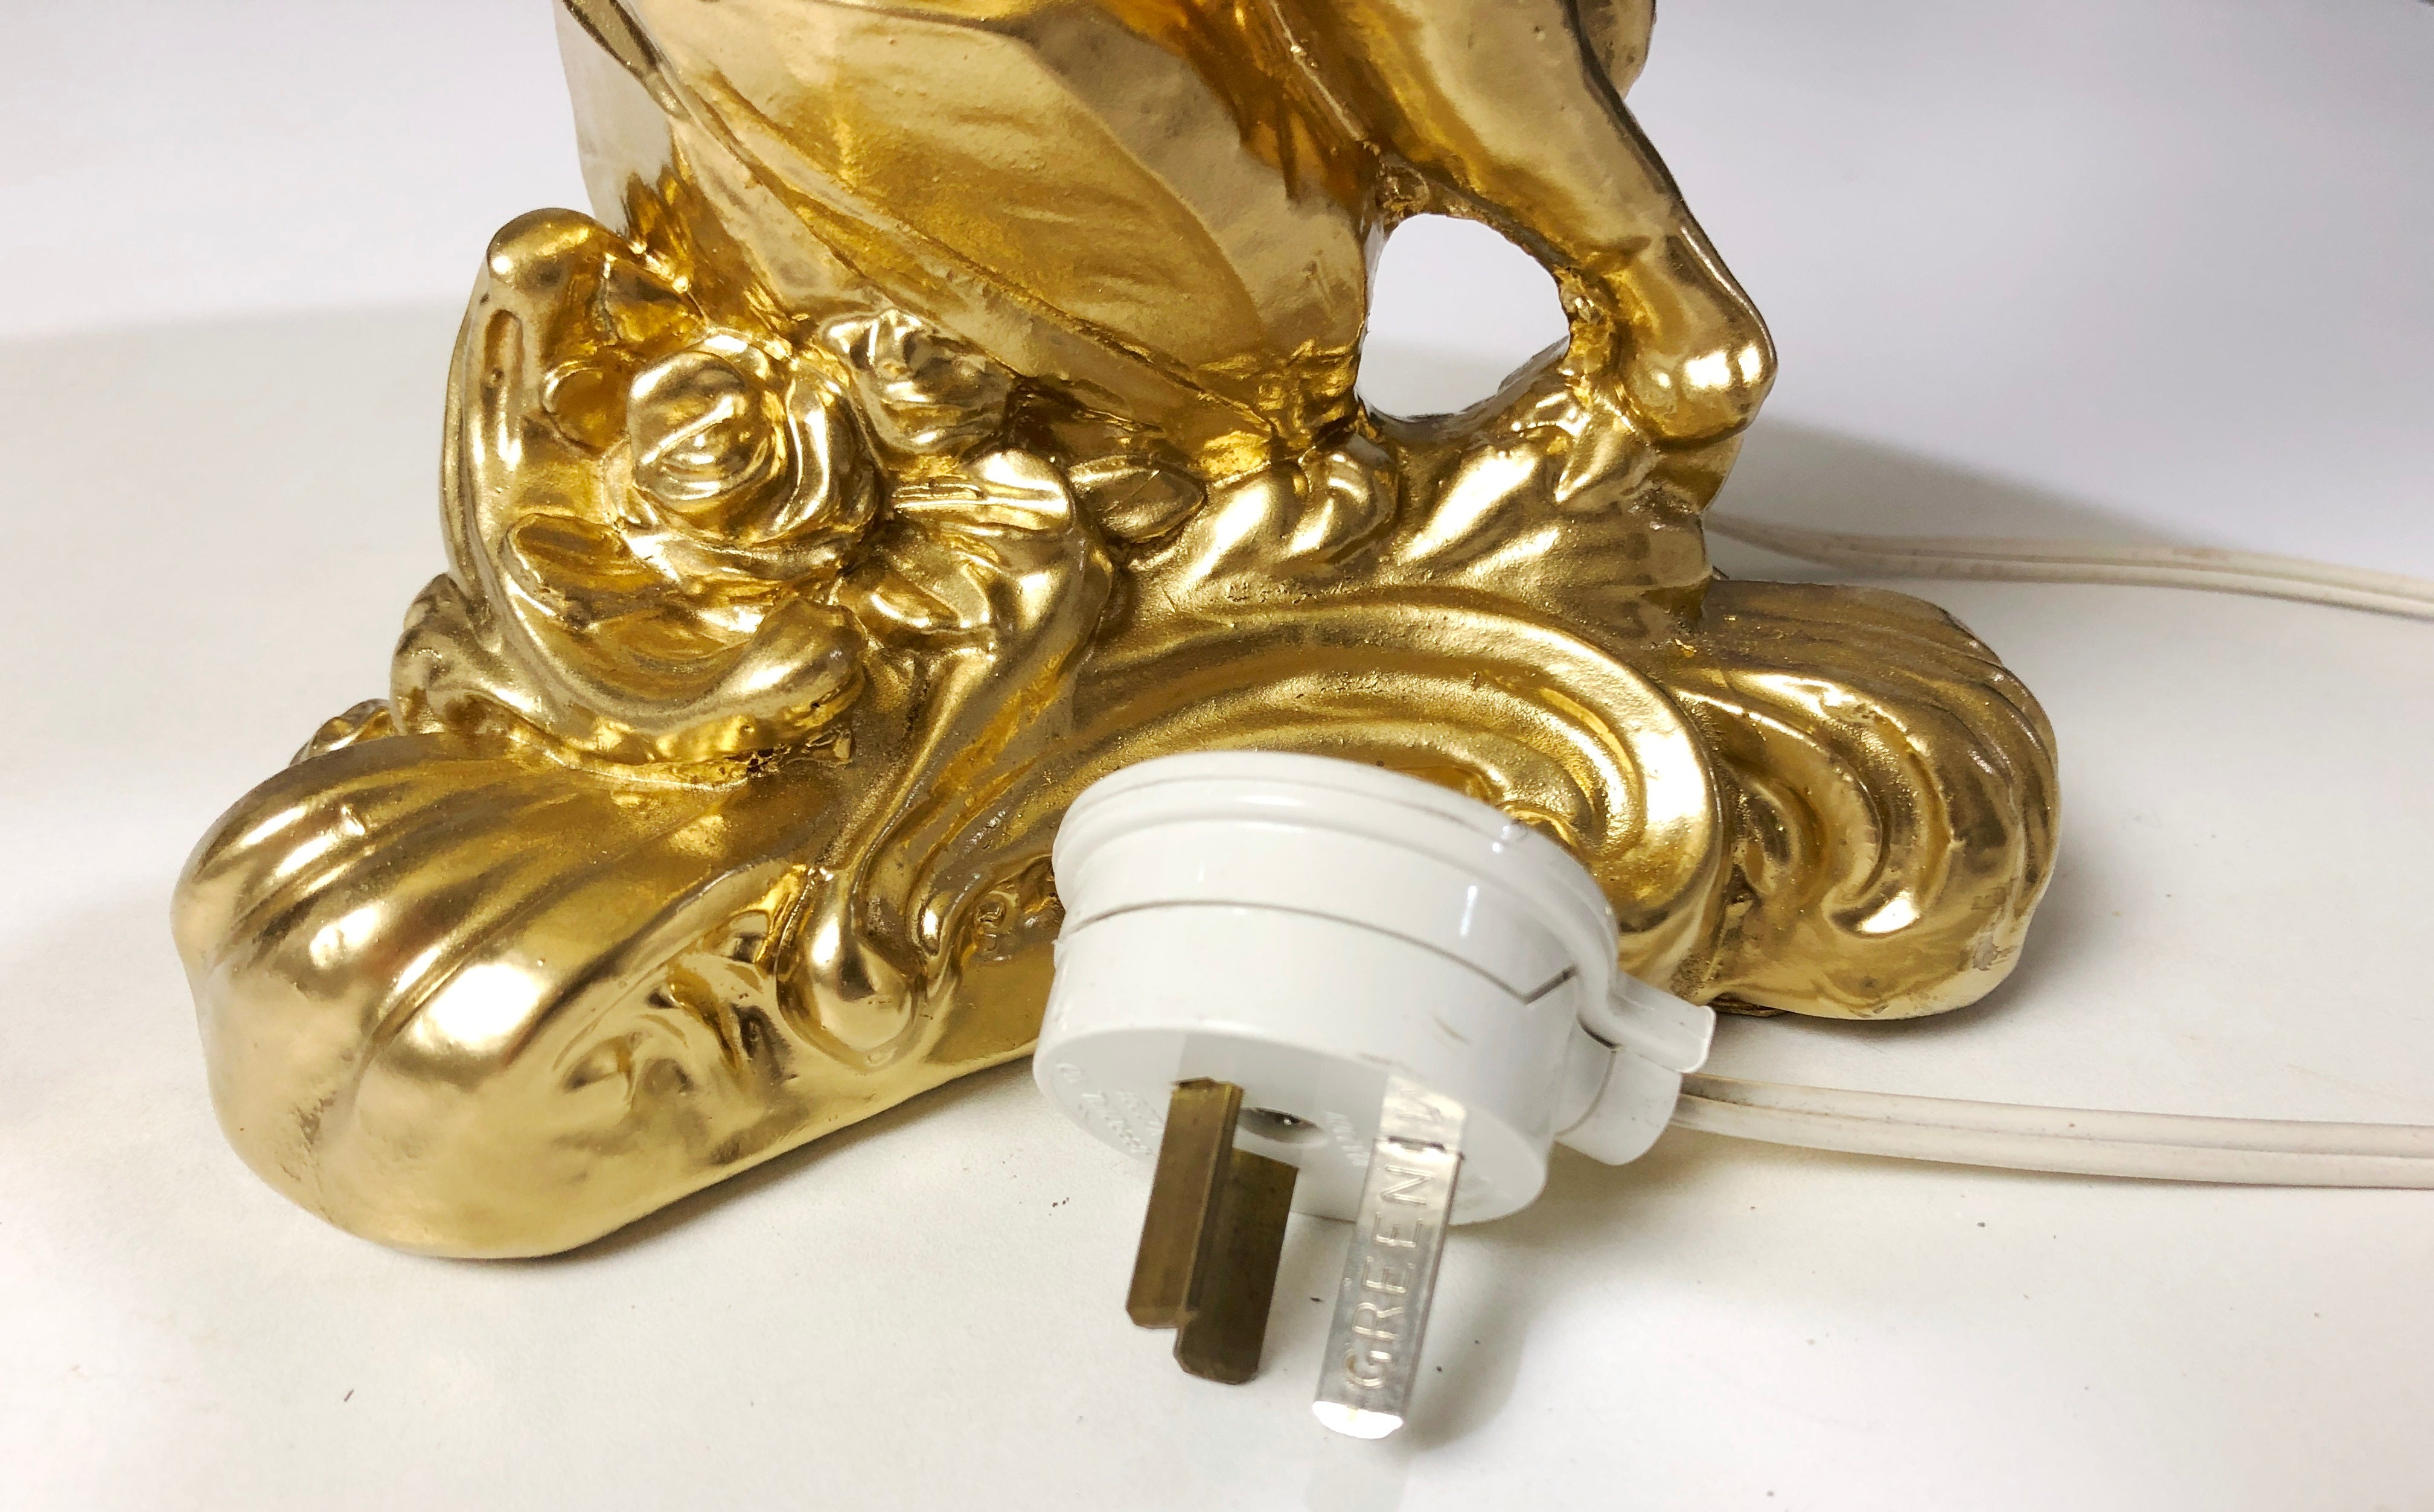 Vintage Ornate Gold Cherub Table Lamp | eXibit collection